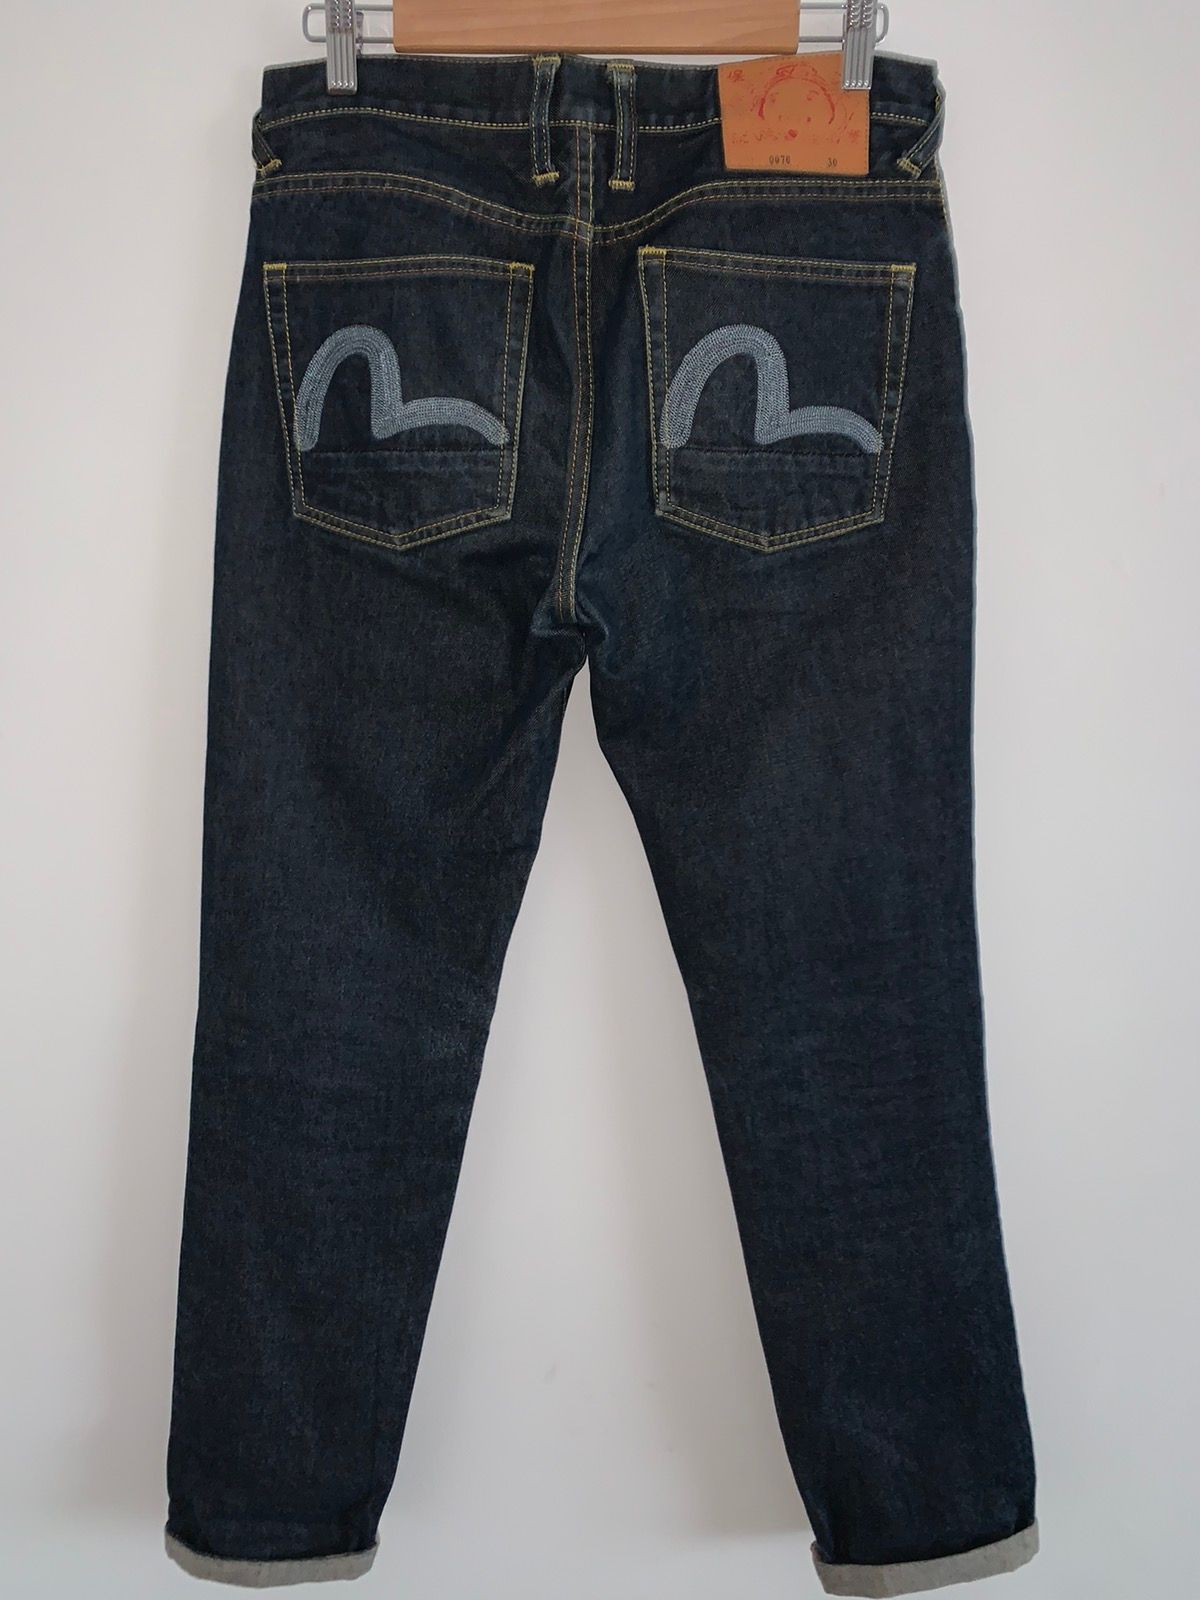 Pre-owned Evisu X Vintage 90's Evisu Daicock Selvedge Blue Japan Jeans Size 34